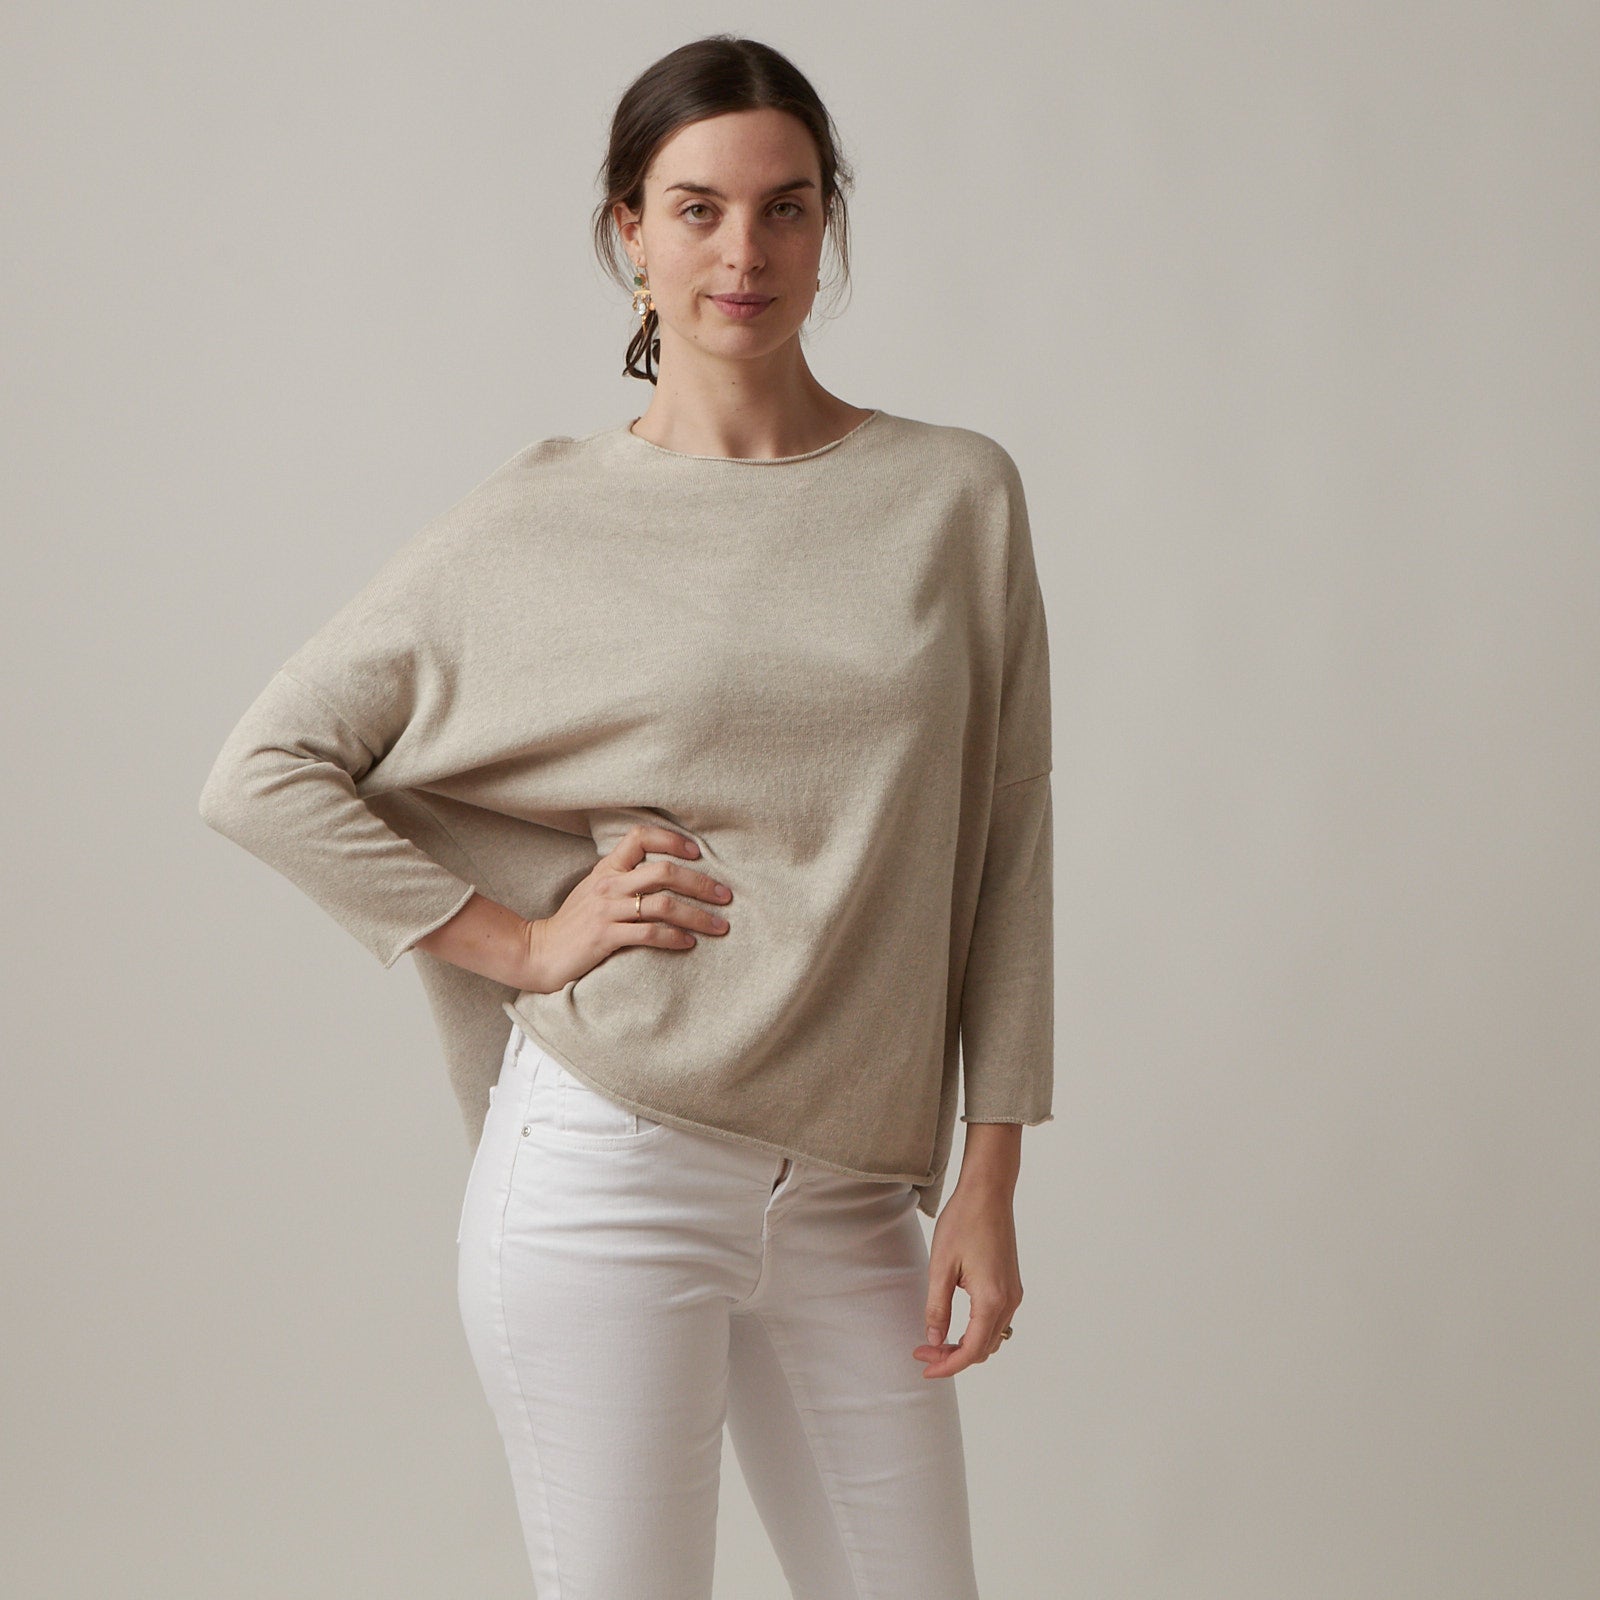 Evam Eva Cashmere Beige Pullover Shirt Top Sweater Women's Size 2